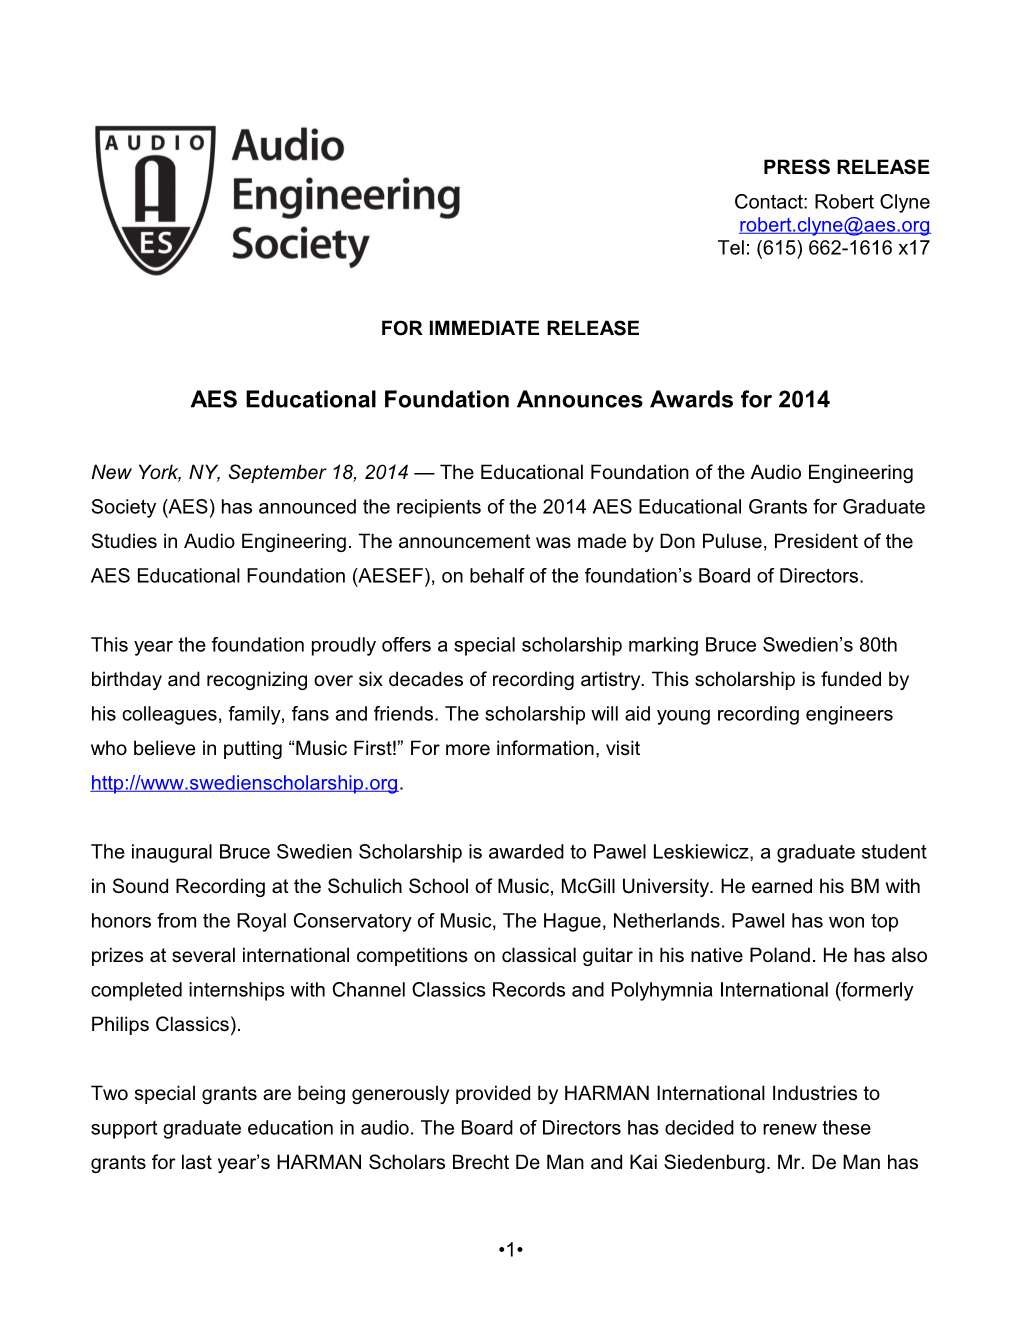 AES Educational Foundation Announces Awards for 2014